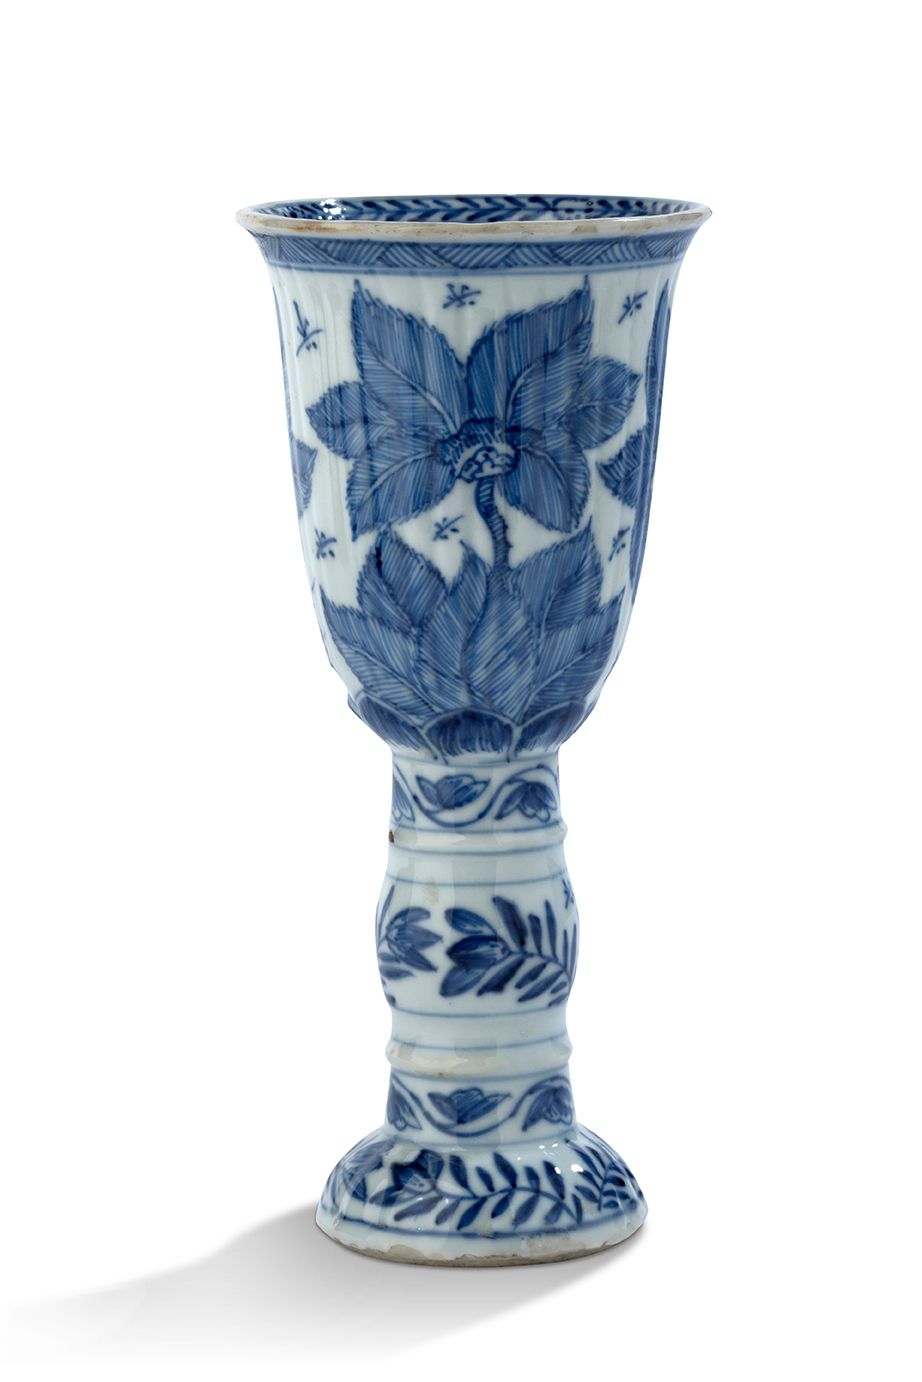 CHINE DYNASTIE QING, ÉPOQUE KANGXI (1661-1722) Copa sobre pedestal
En porcelana &hellip;